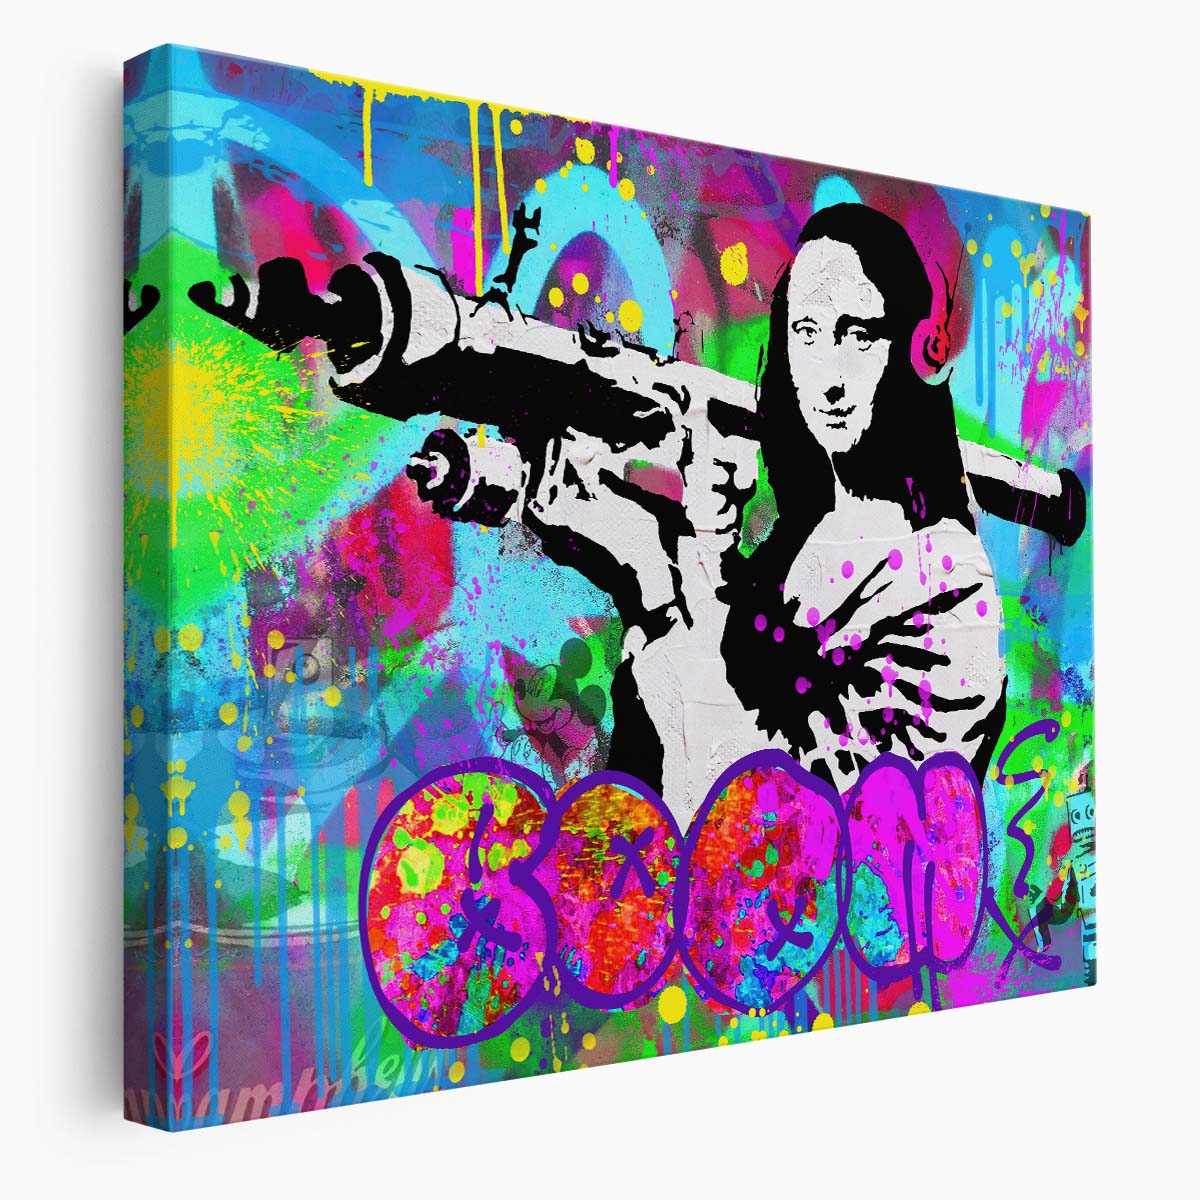 Banksy Mona Lisa Rocket Launcher Graffiti Wall Art by Luxuriance Designs. Made in USA.